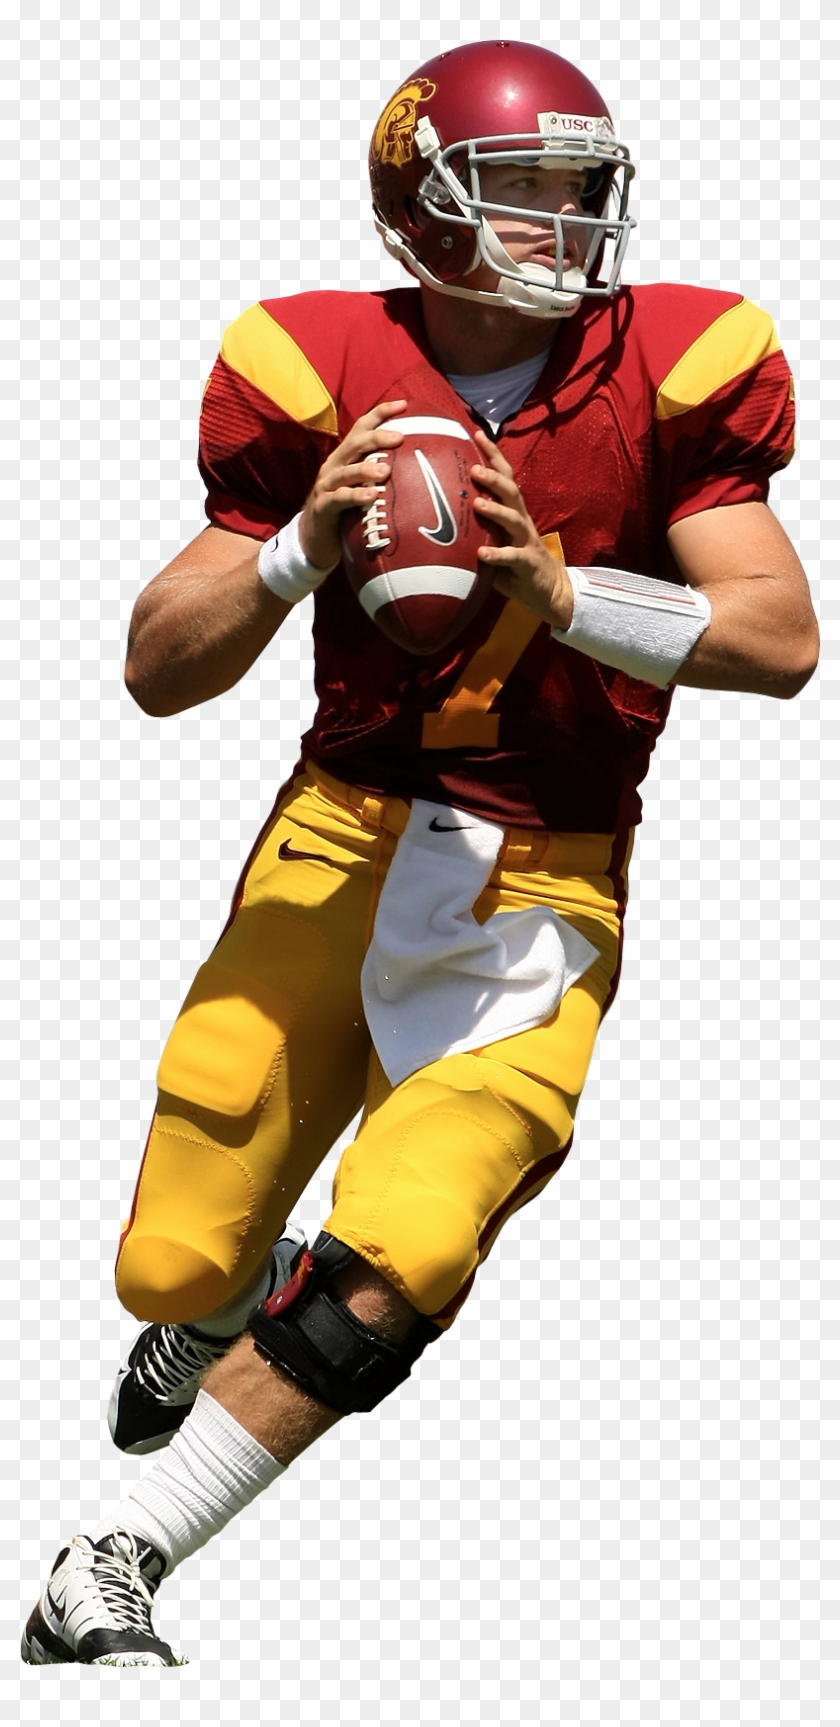 Matt Barkley Usc Quarterback - Usc Football Player Png Clipart #205370